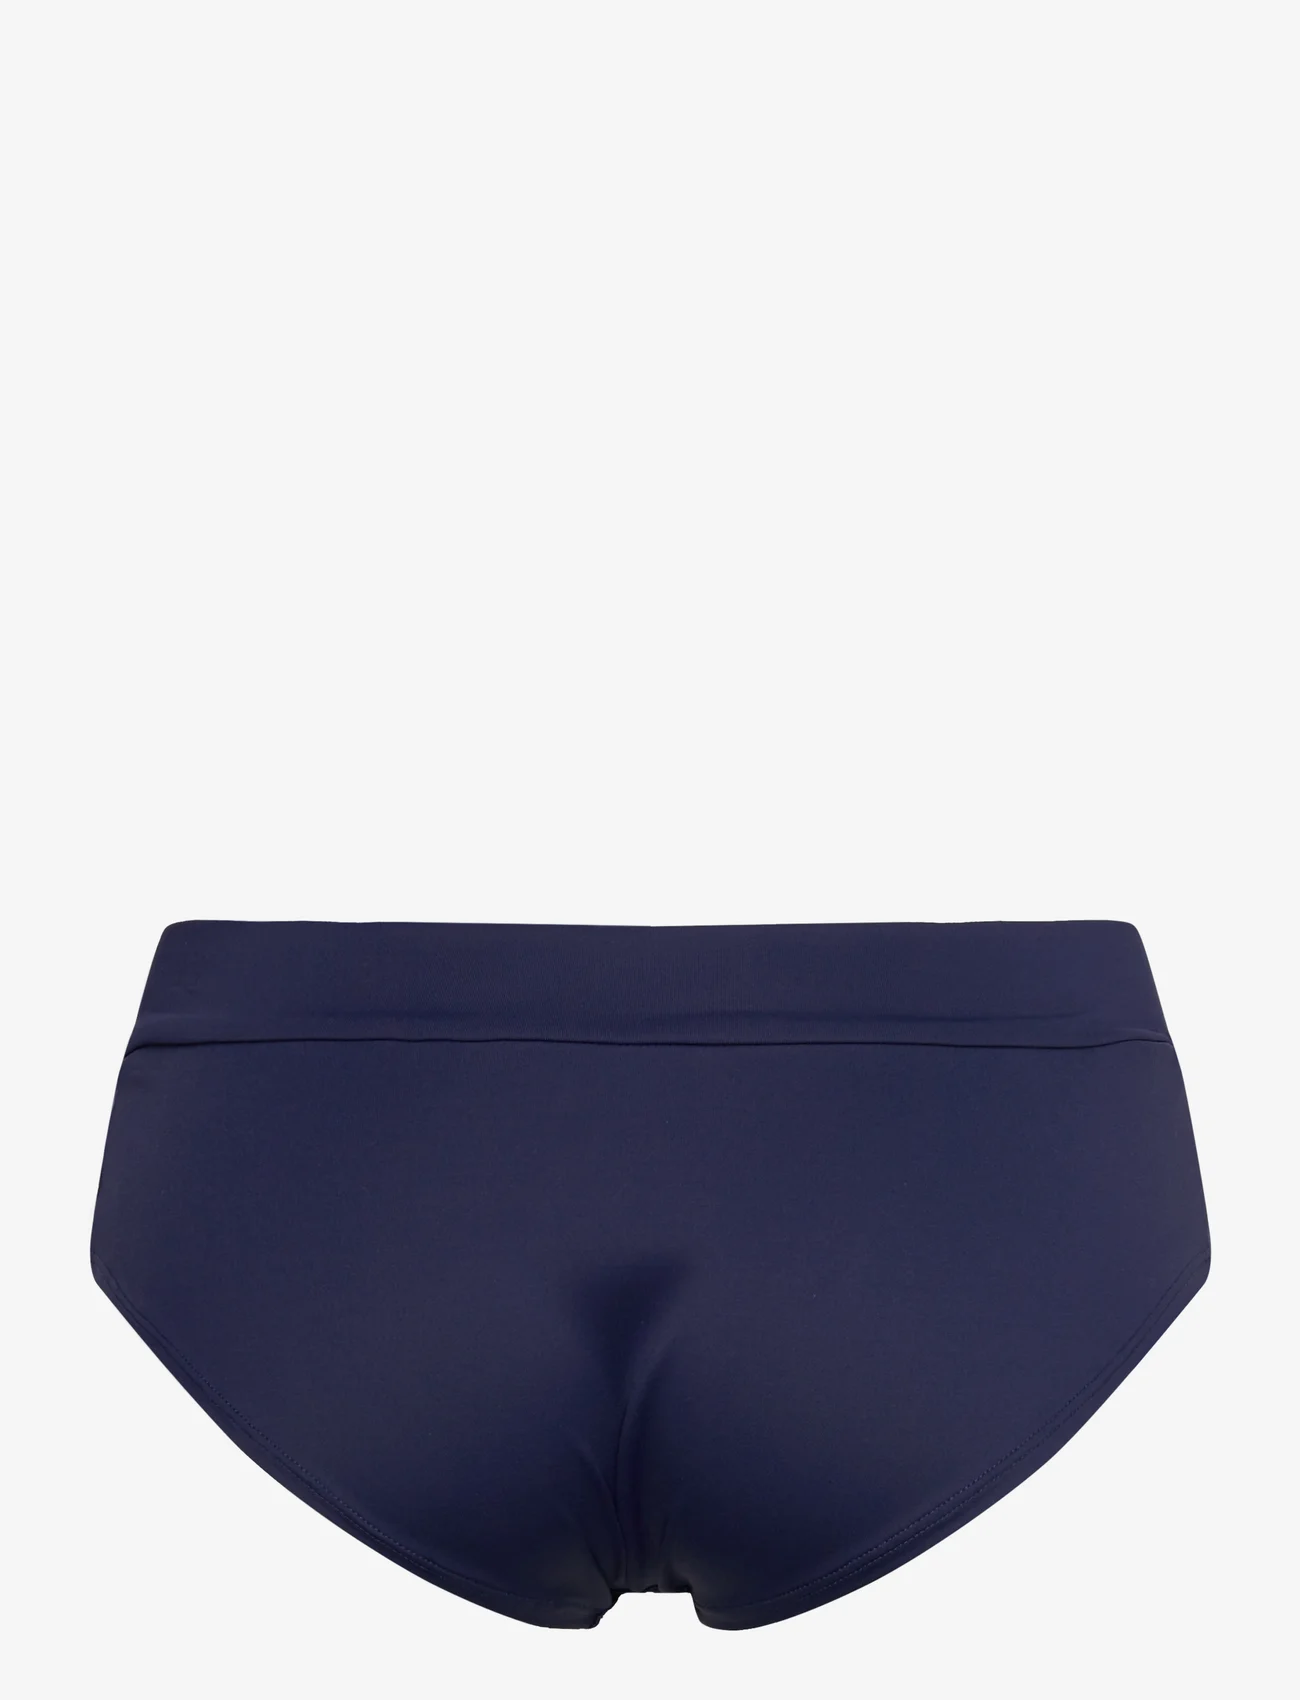 Panos Emporio - Melina Solid Bottom - bikini briefs - navy - 1